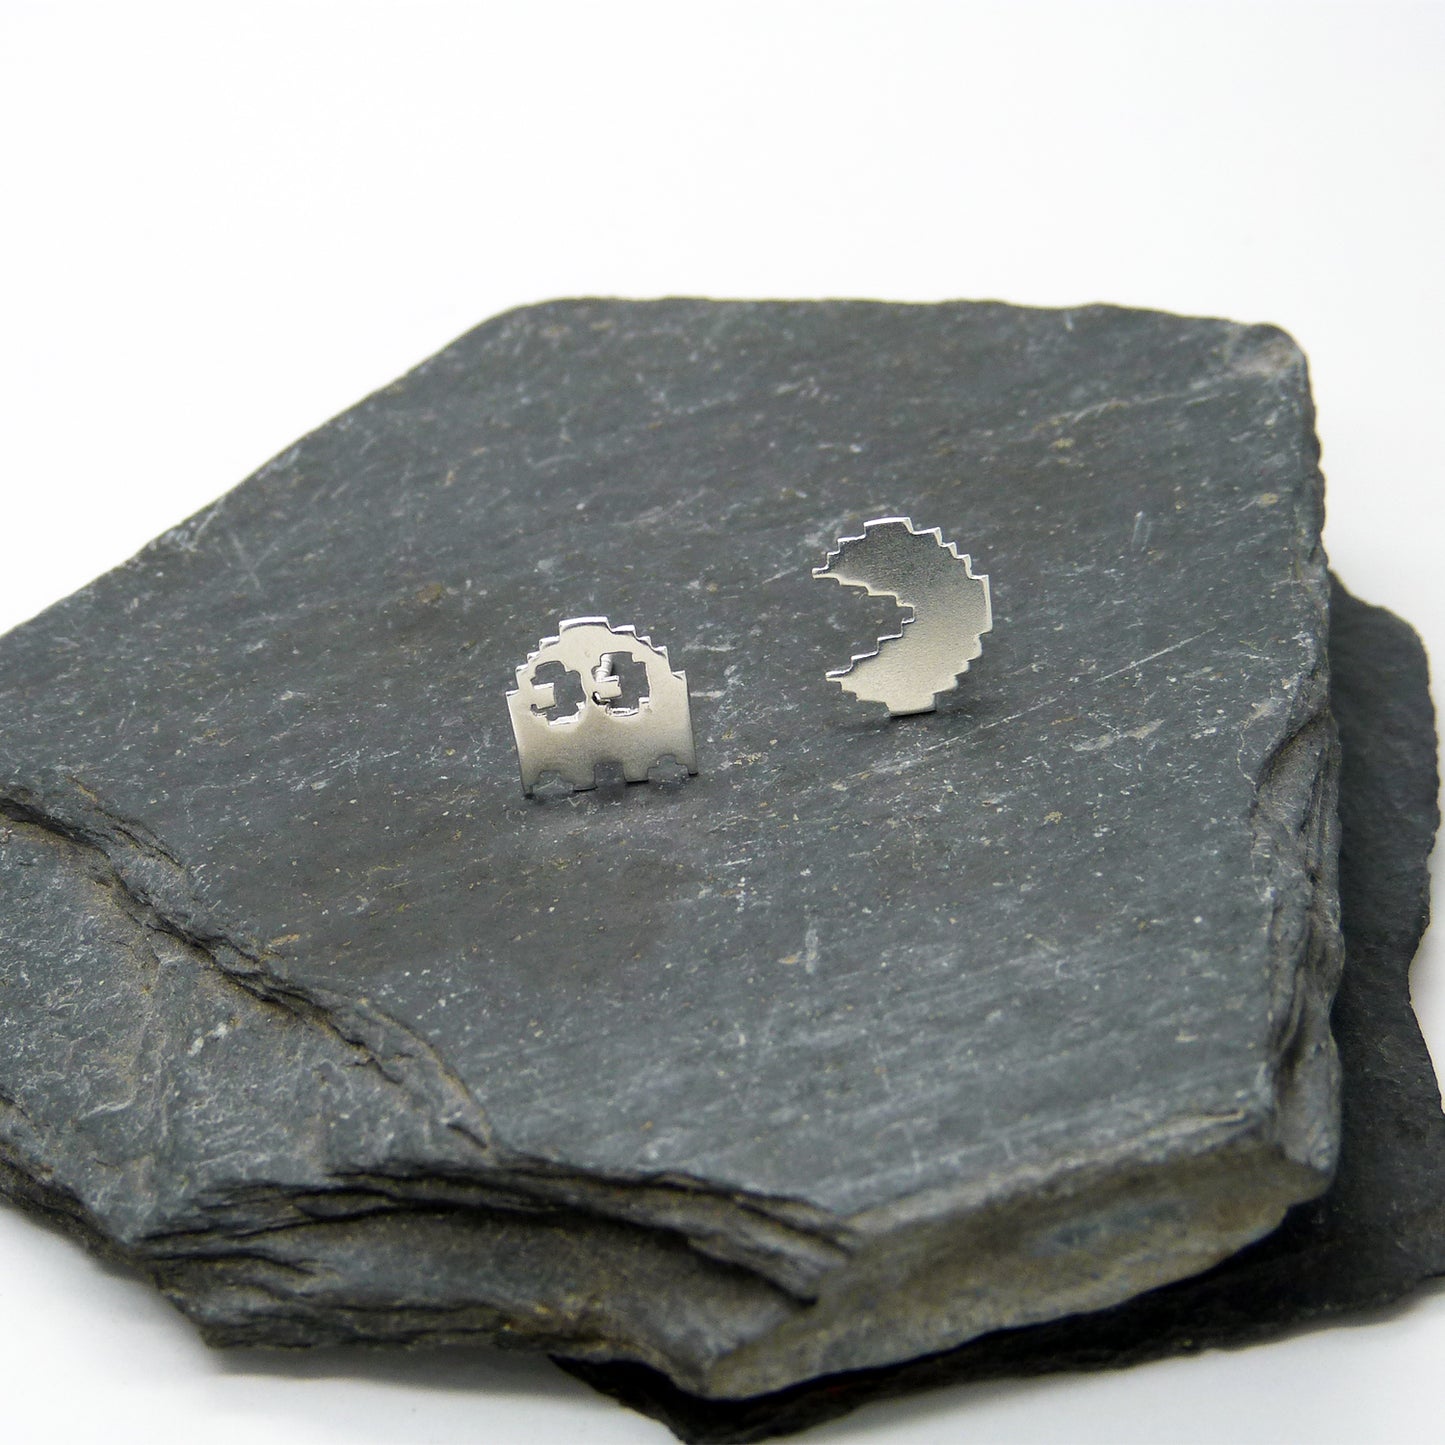 Pacman 8 bits Small 925 silver earrings